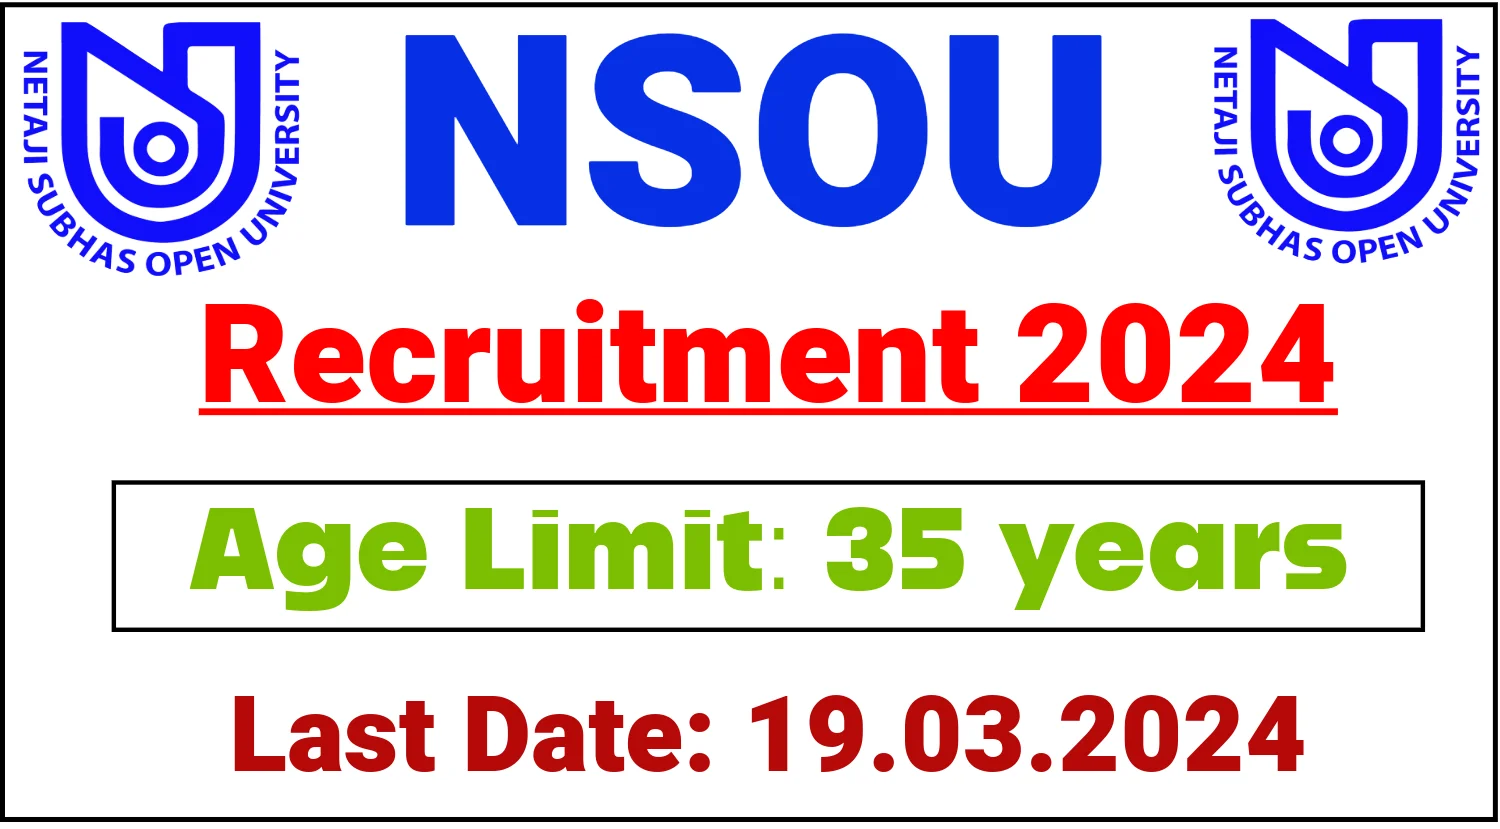 NSOU Recruitment 2024